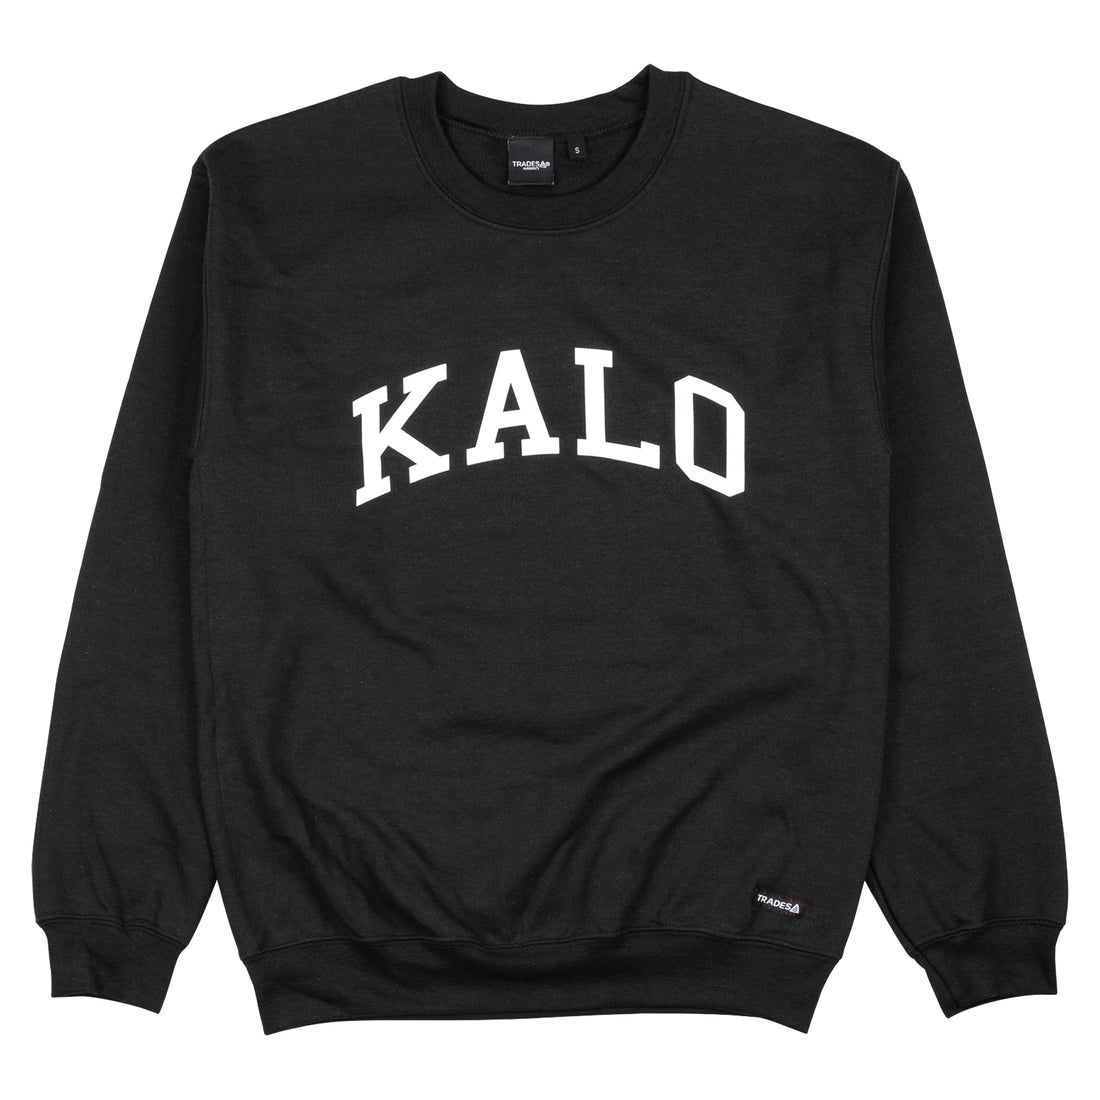 KALO Crewneck Sweatshirt - Black / White